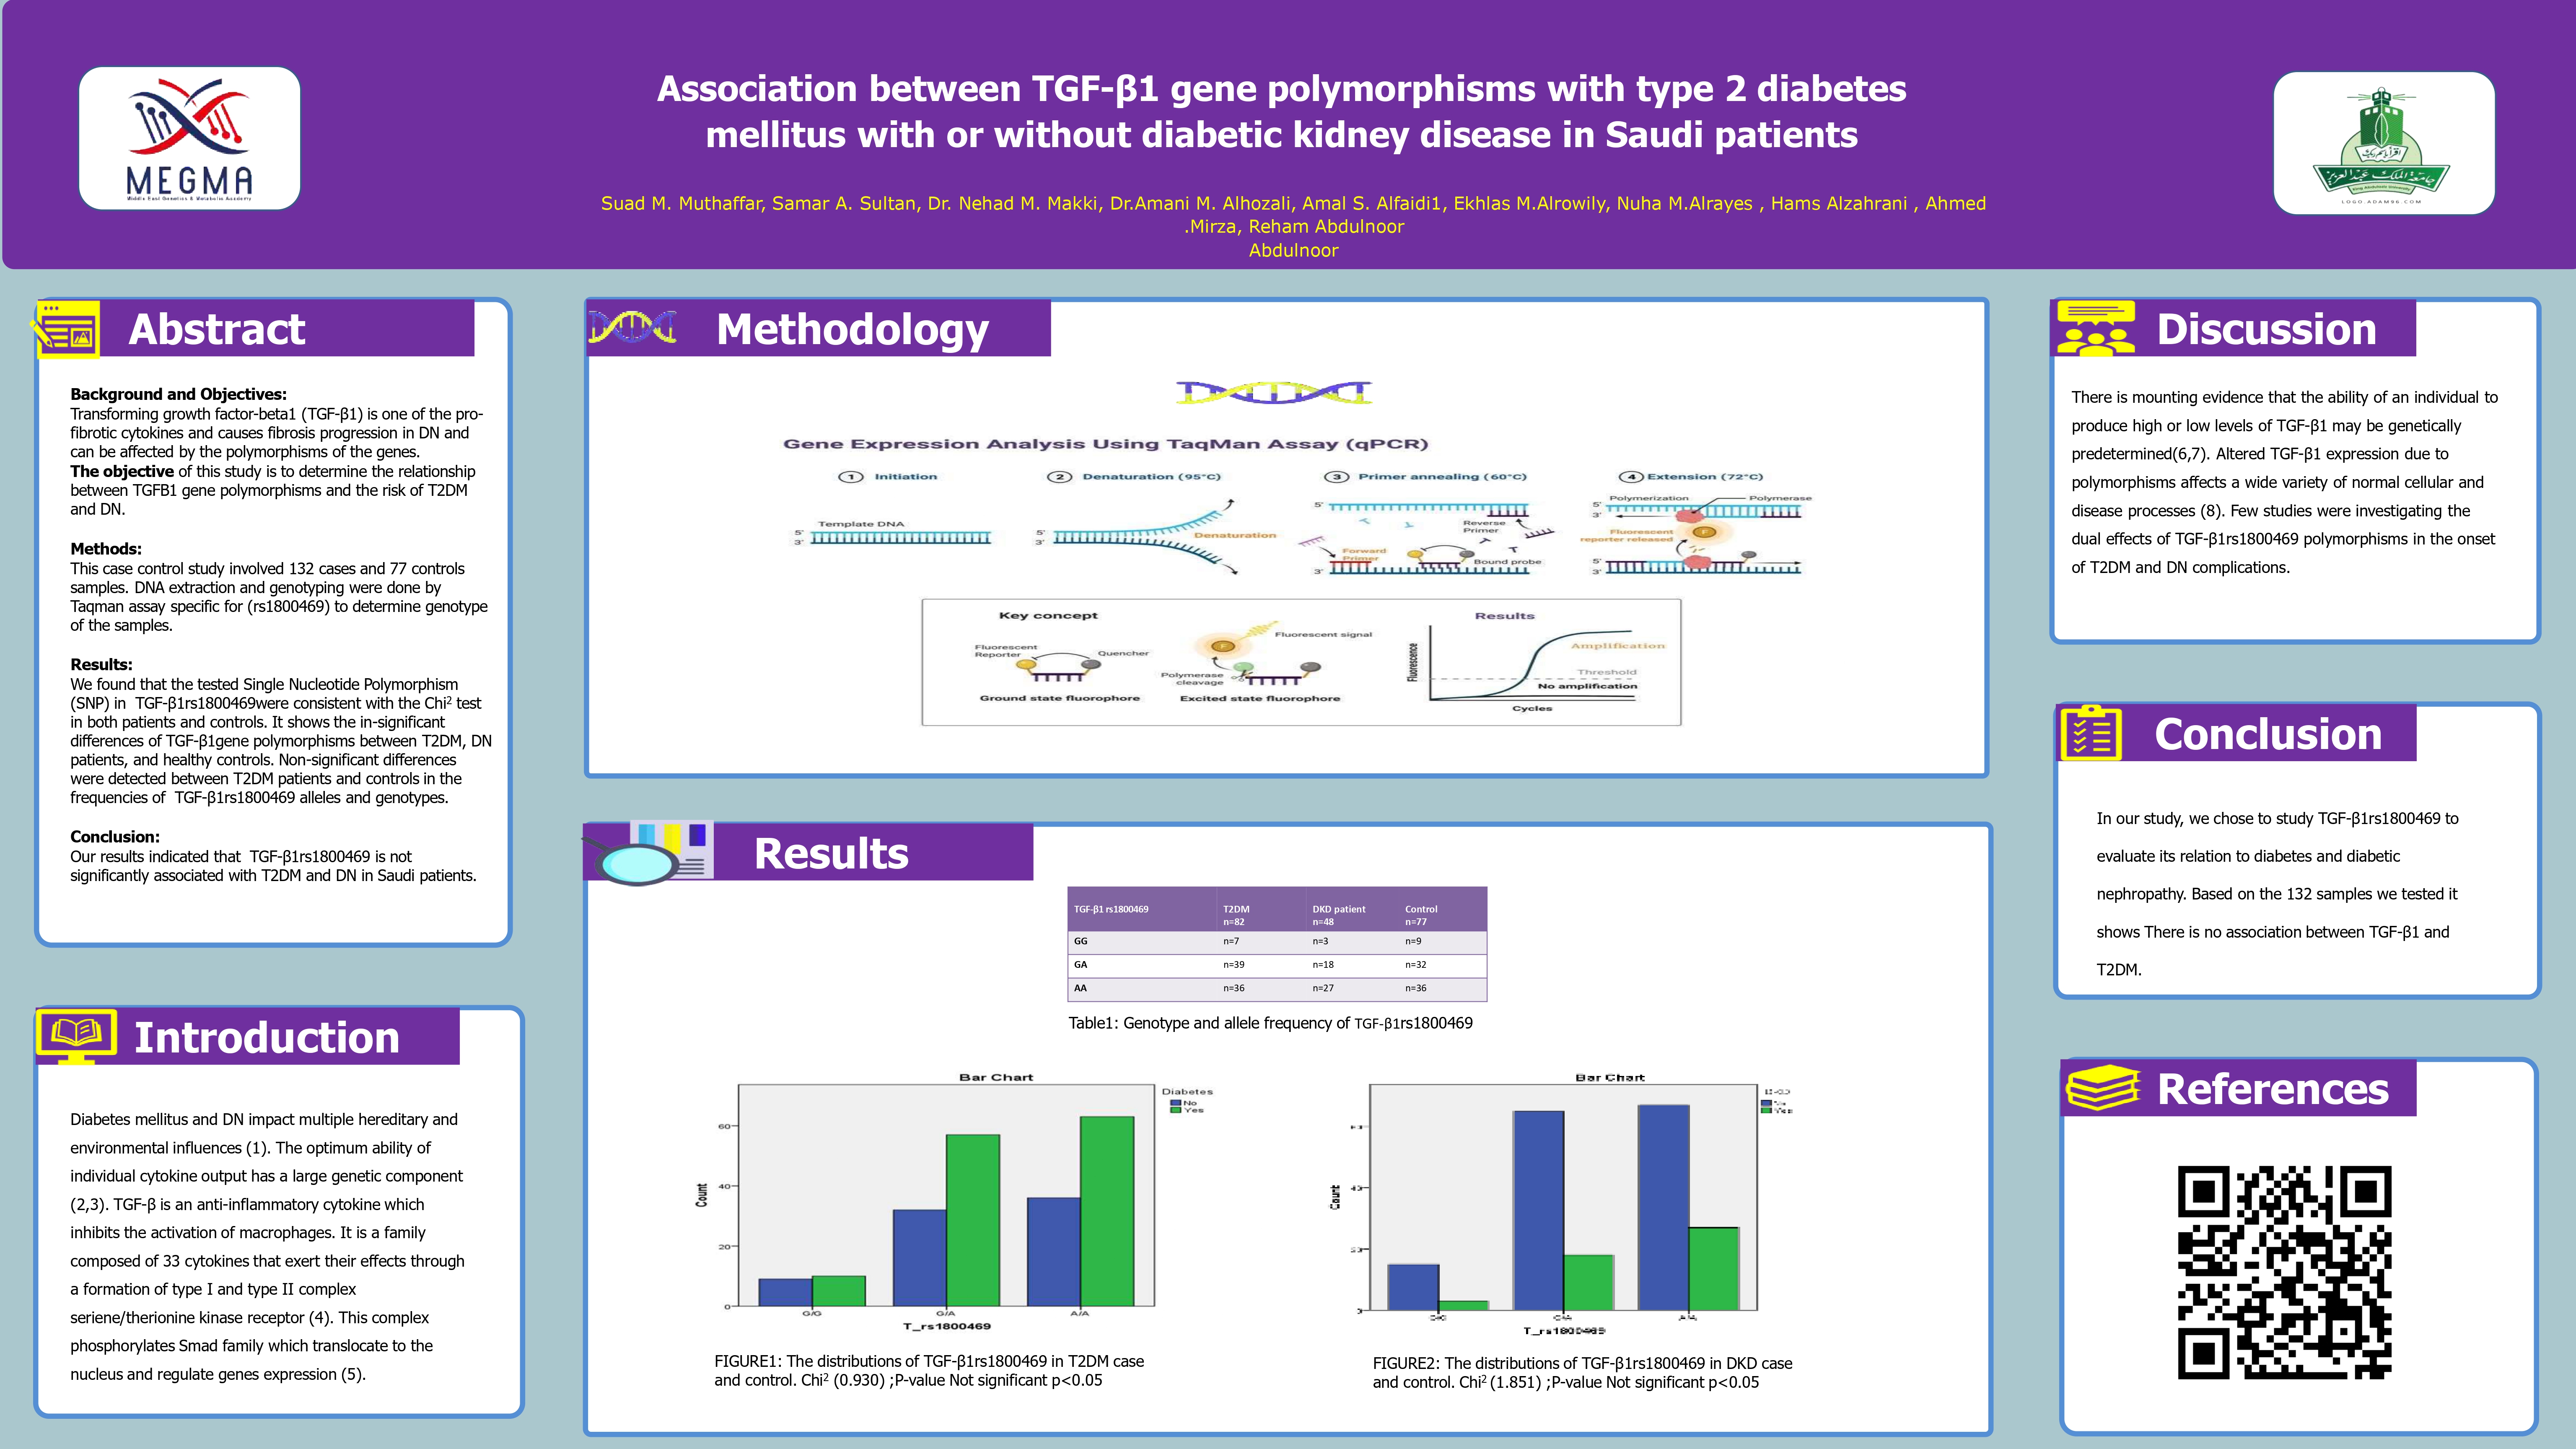 Association between TGF-Î²1 gene polymorphisms with type 2 diabetes mellitus with or without diabetic kidney disease in Saudi patients